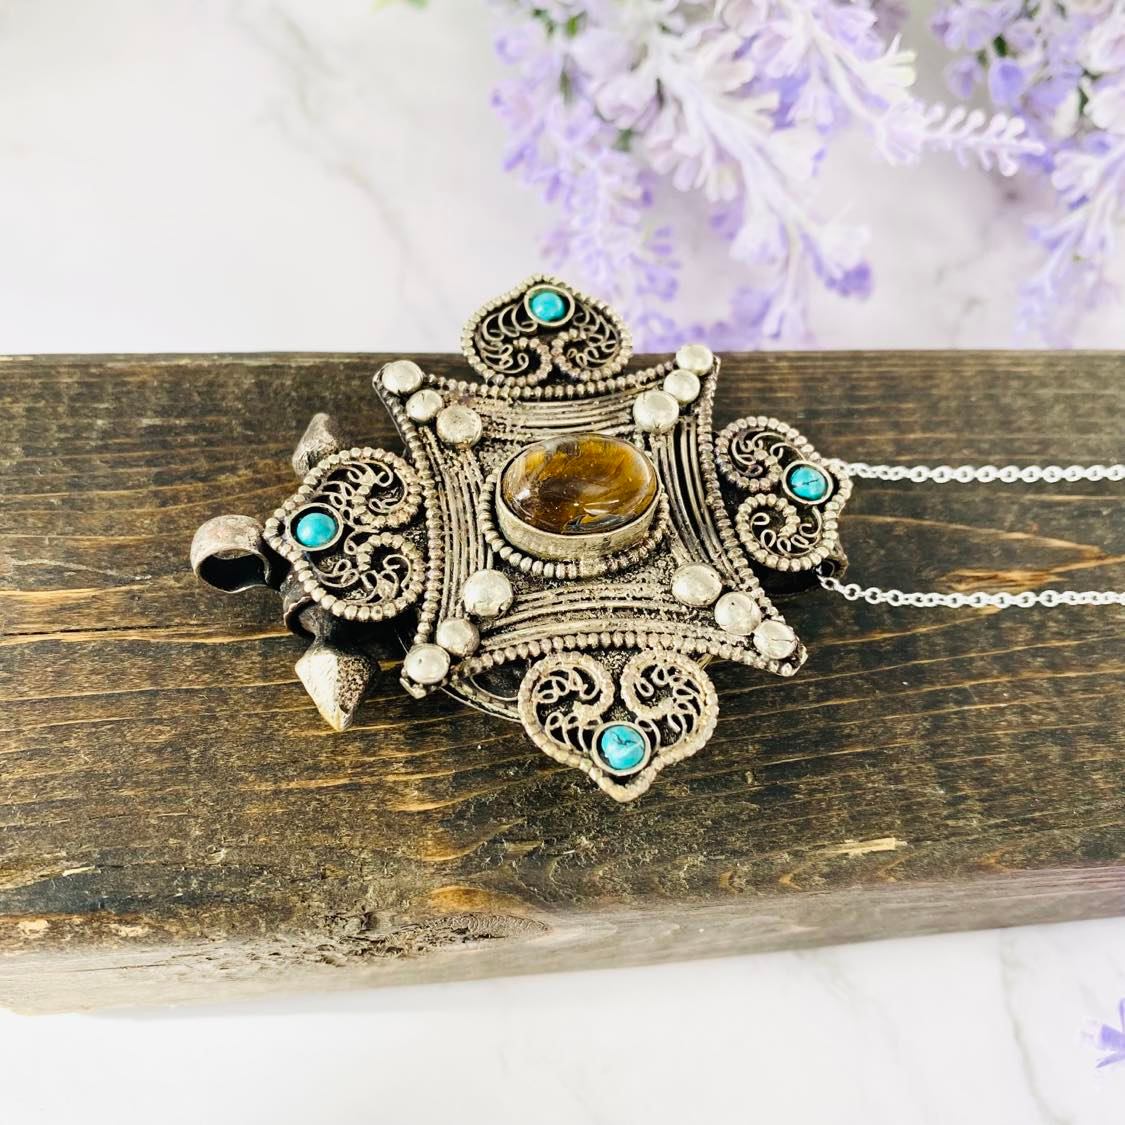 Filigree Design Pendant, Handmade Bohemian Jewelry, Tiger Eye Pendant, Lapis Lazuli Necklace, Vintage Flower Pendant, Gift For Her